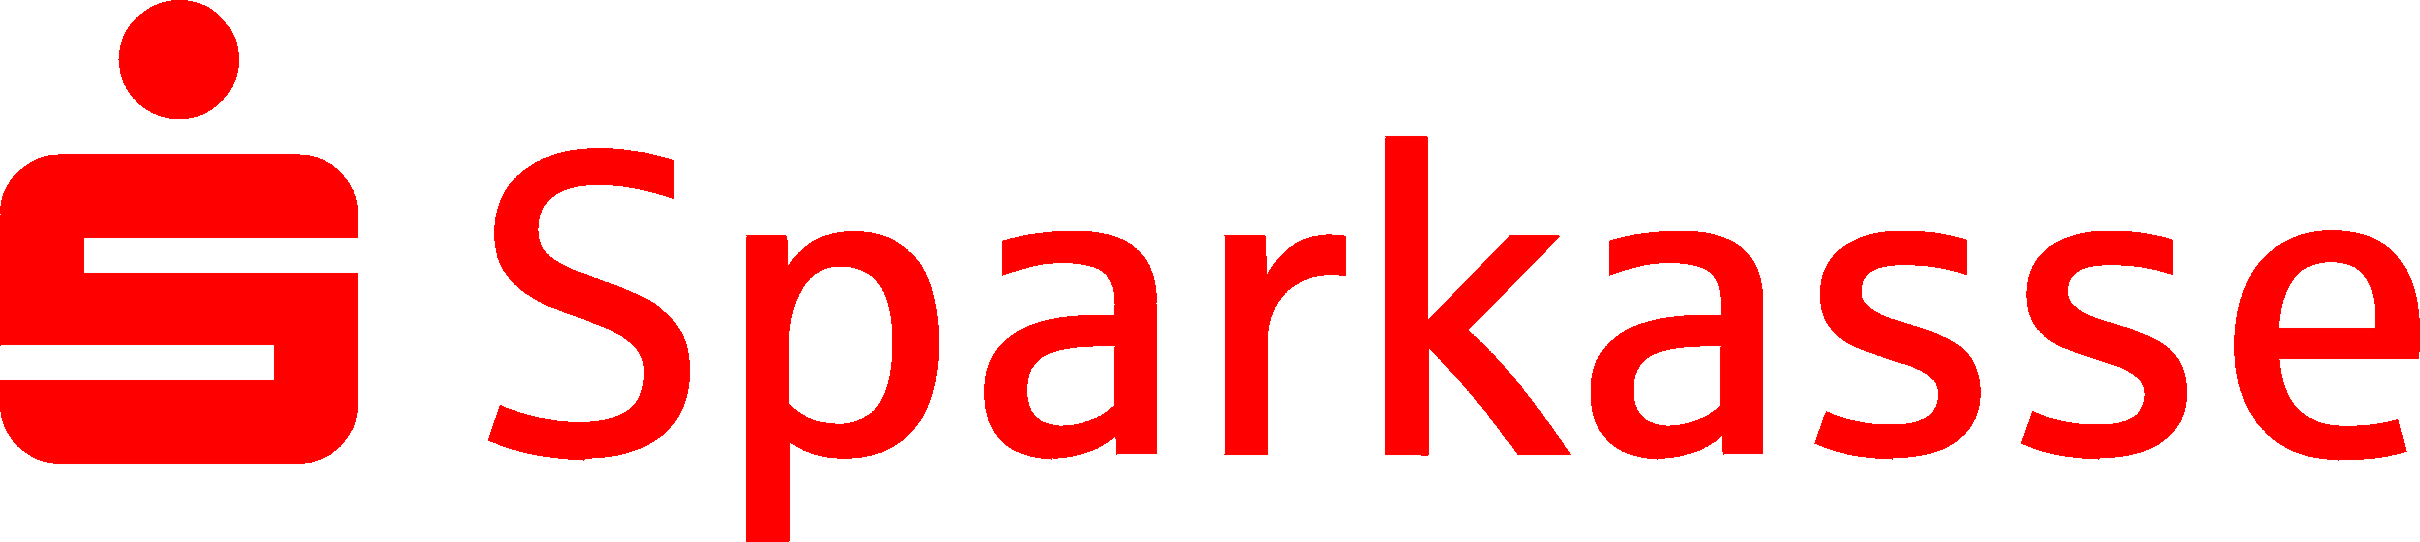 Logo Sparkasse.jpg